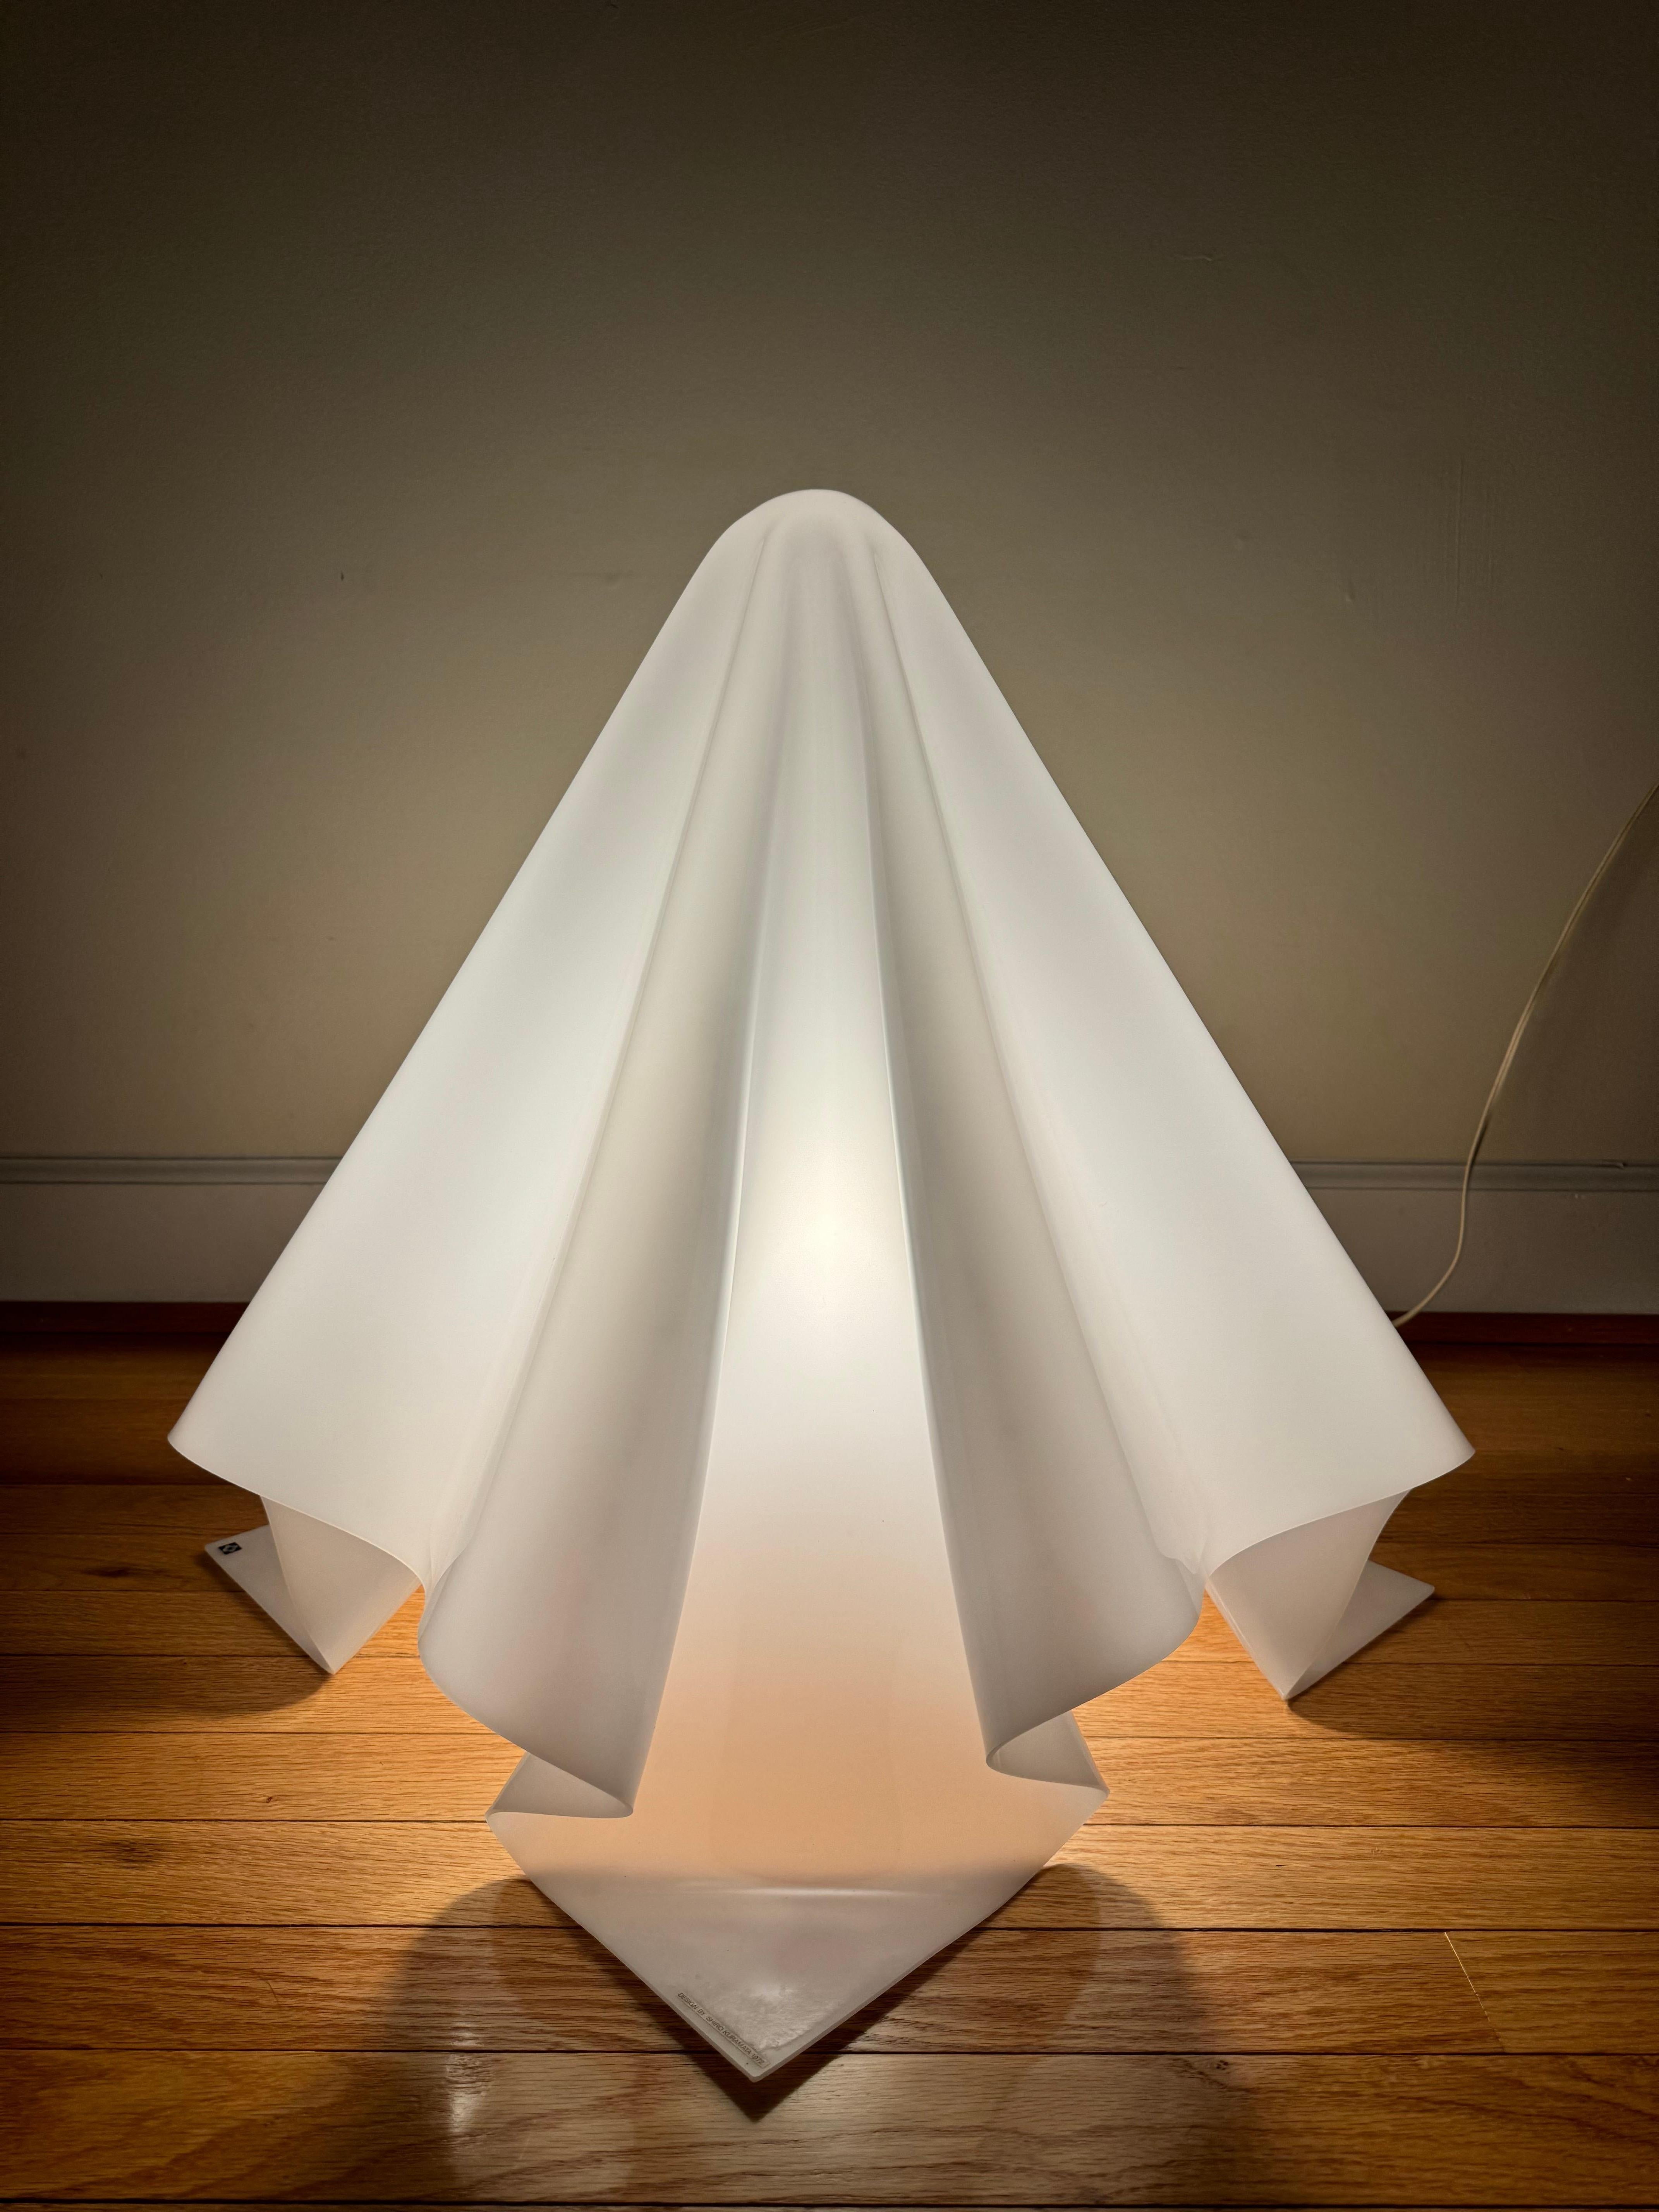 Rare early K-series (Oba- Q/Ghost) table lamp by Shiro Kuramata (Large) 1